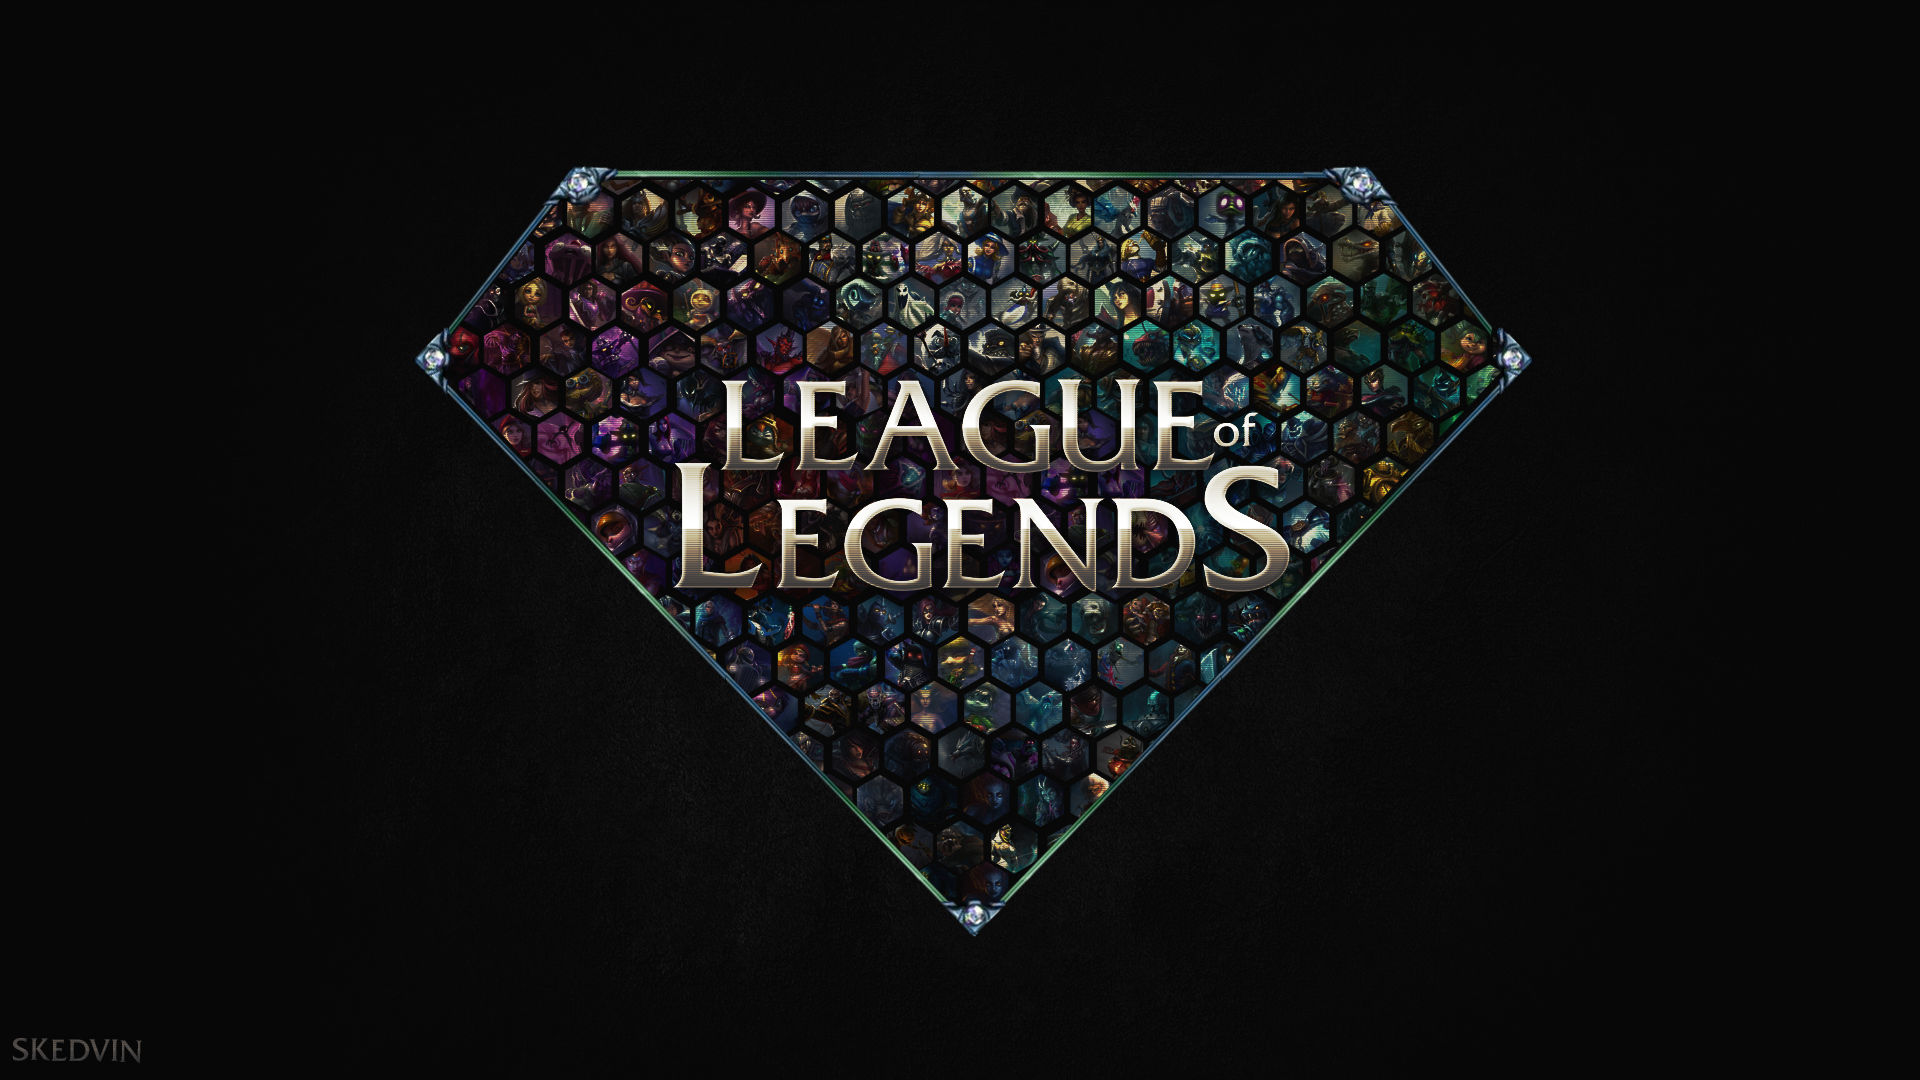 P league of legends wallpaper